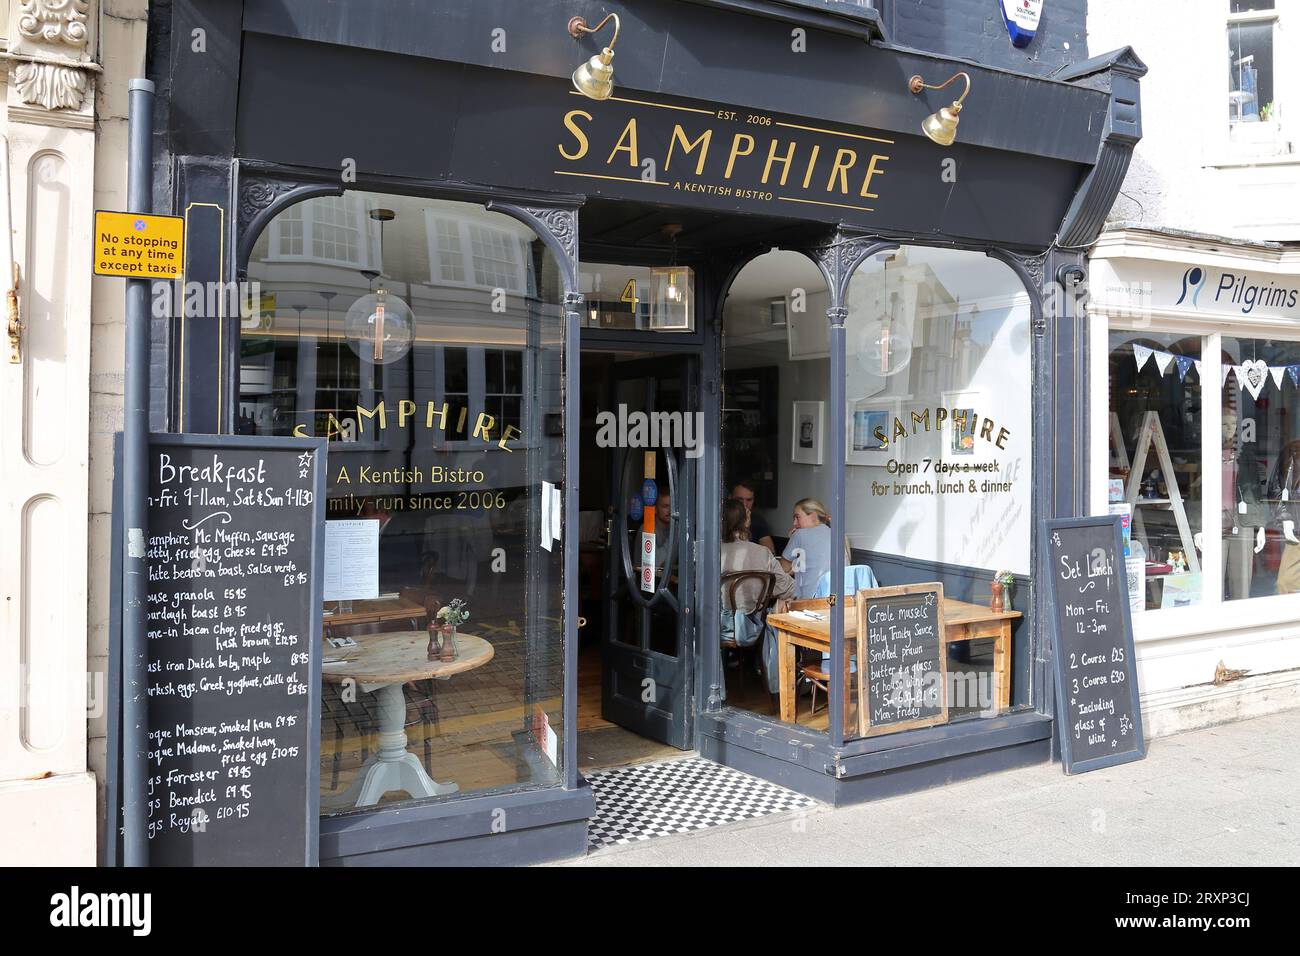 Samphire restaurant, High Street, Whitstable, Kent, Angleterre, grande-Bretagne, Royaume-Uni, Royaume-Uni, Europe Banque D'Images